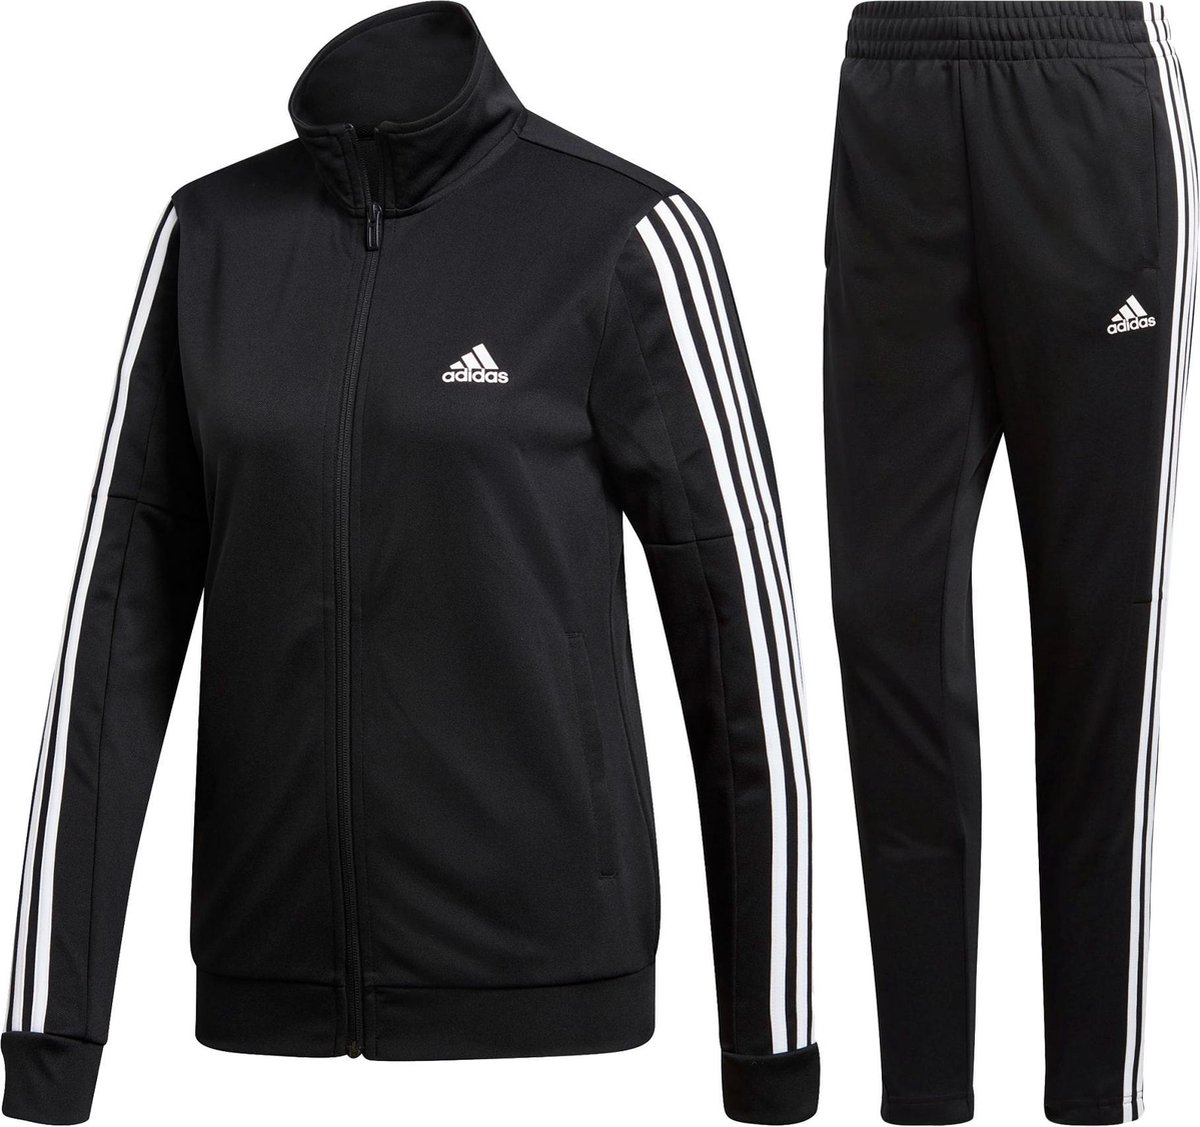 adidas Team Sports Trainingspak - Maat M - Vrouwen - zwart/wit ...